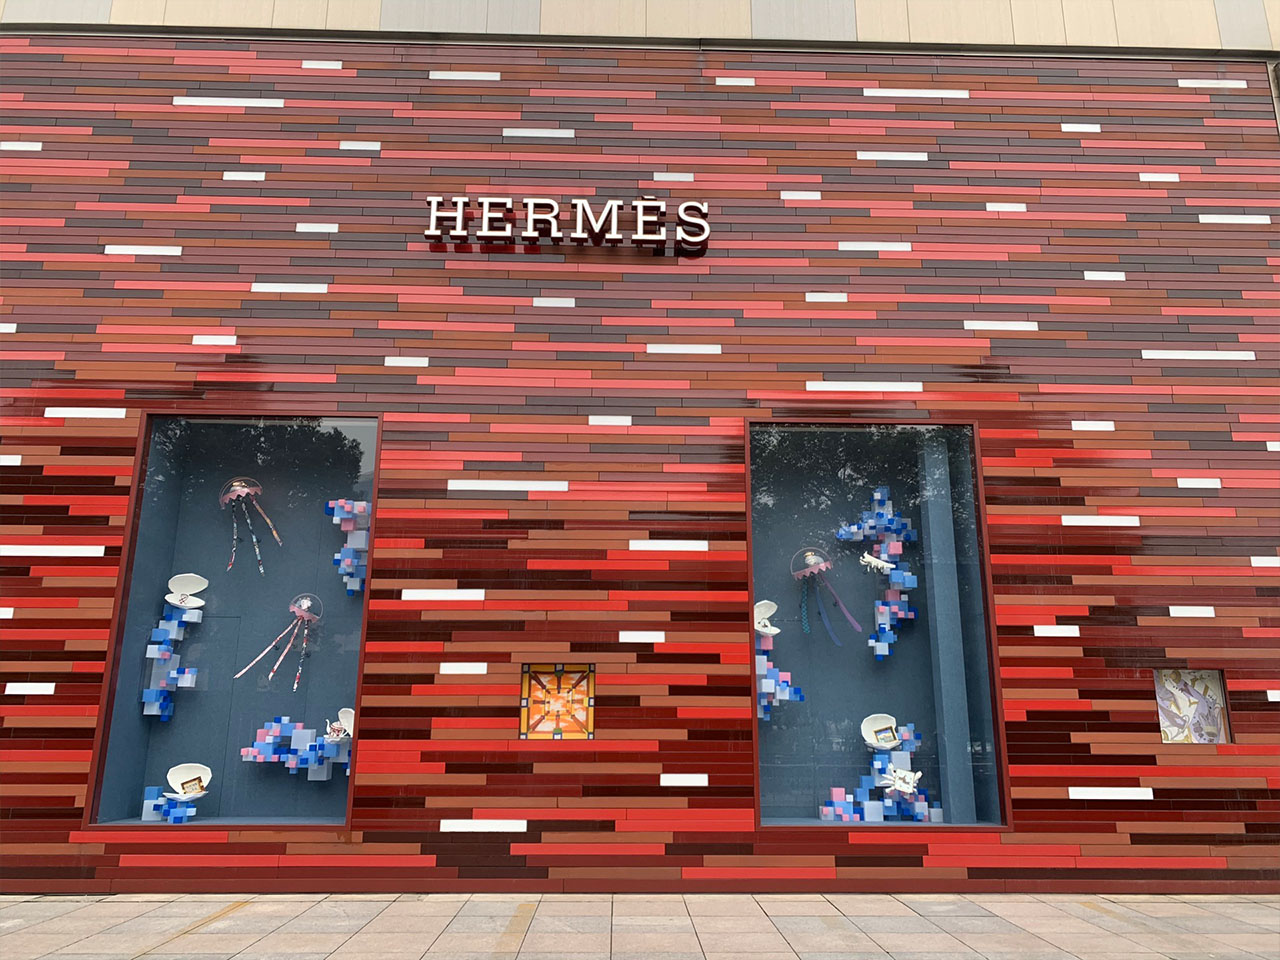 Hermes Shopfront, Hangzhou China